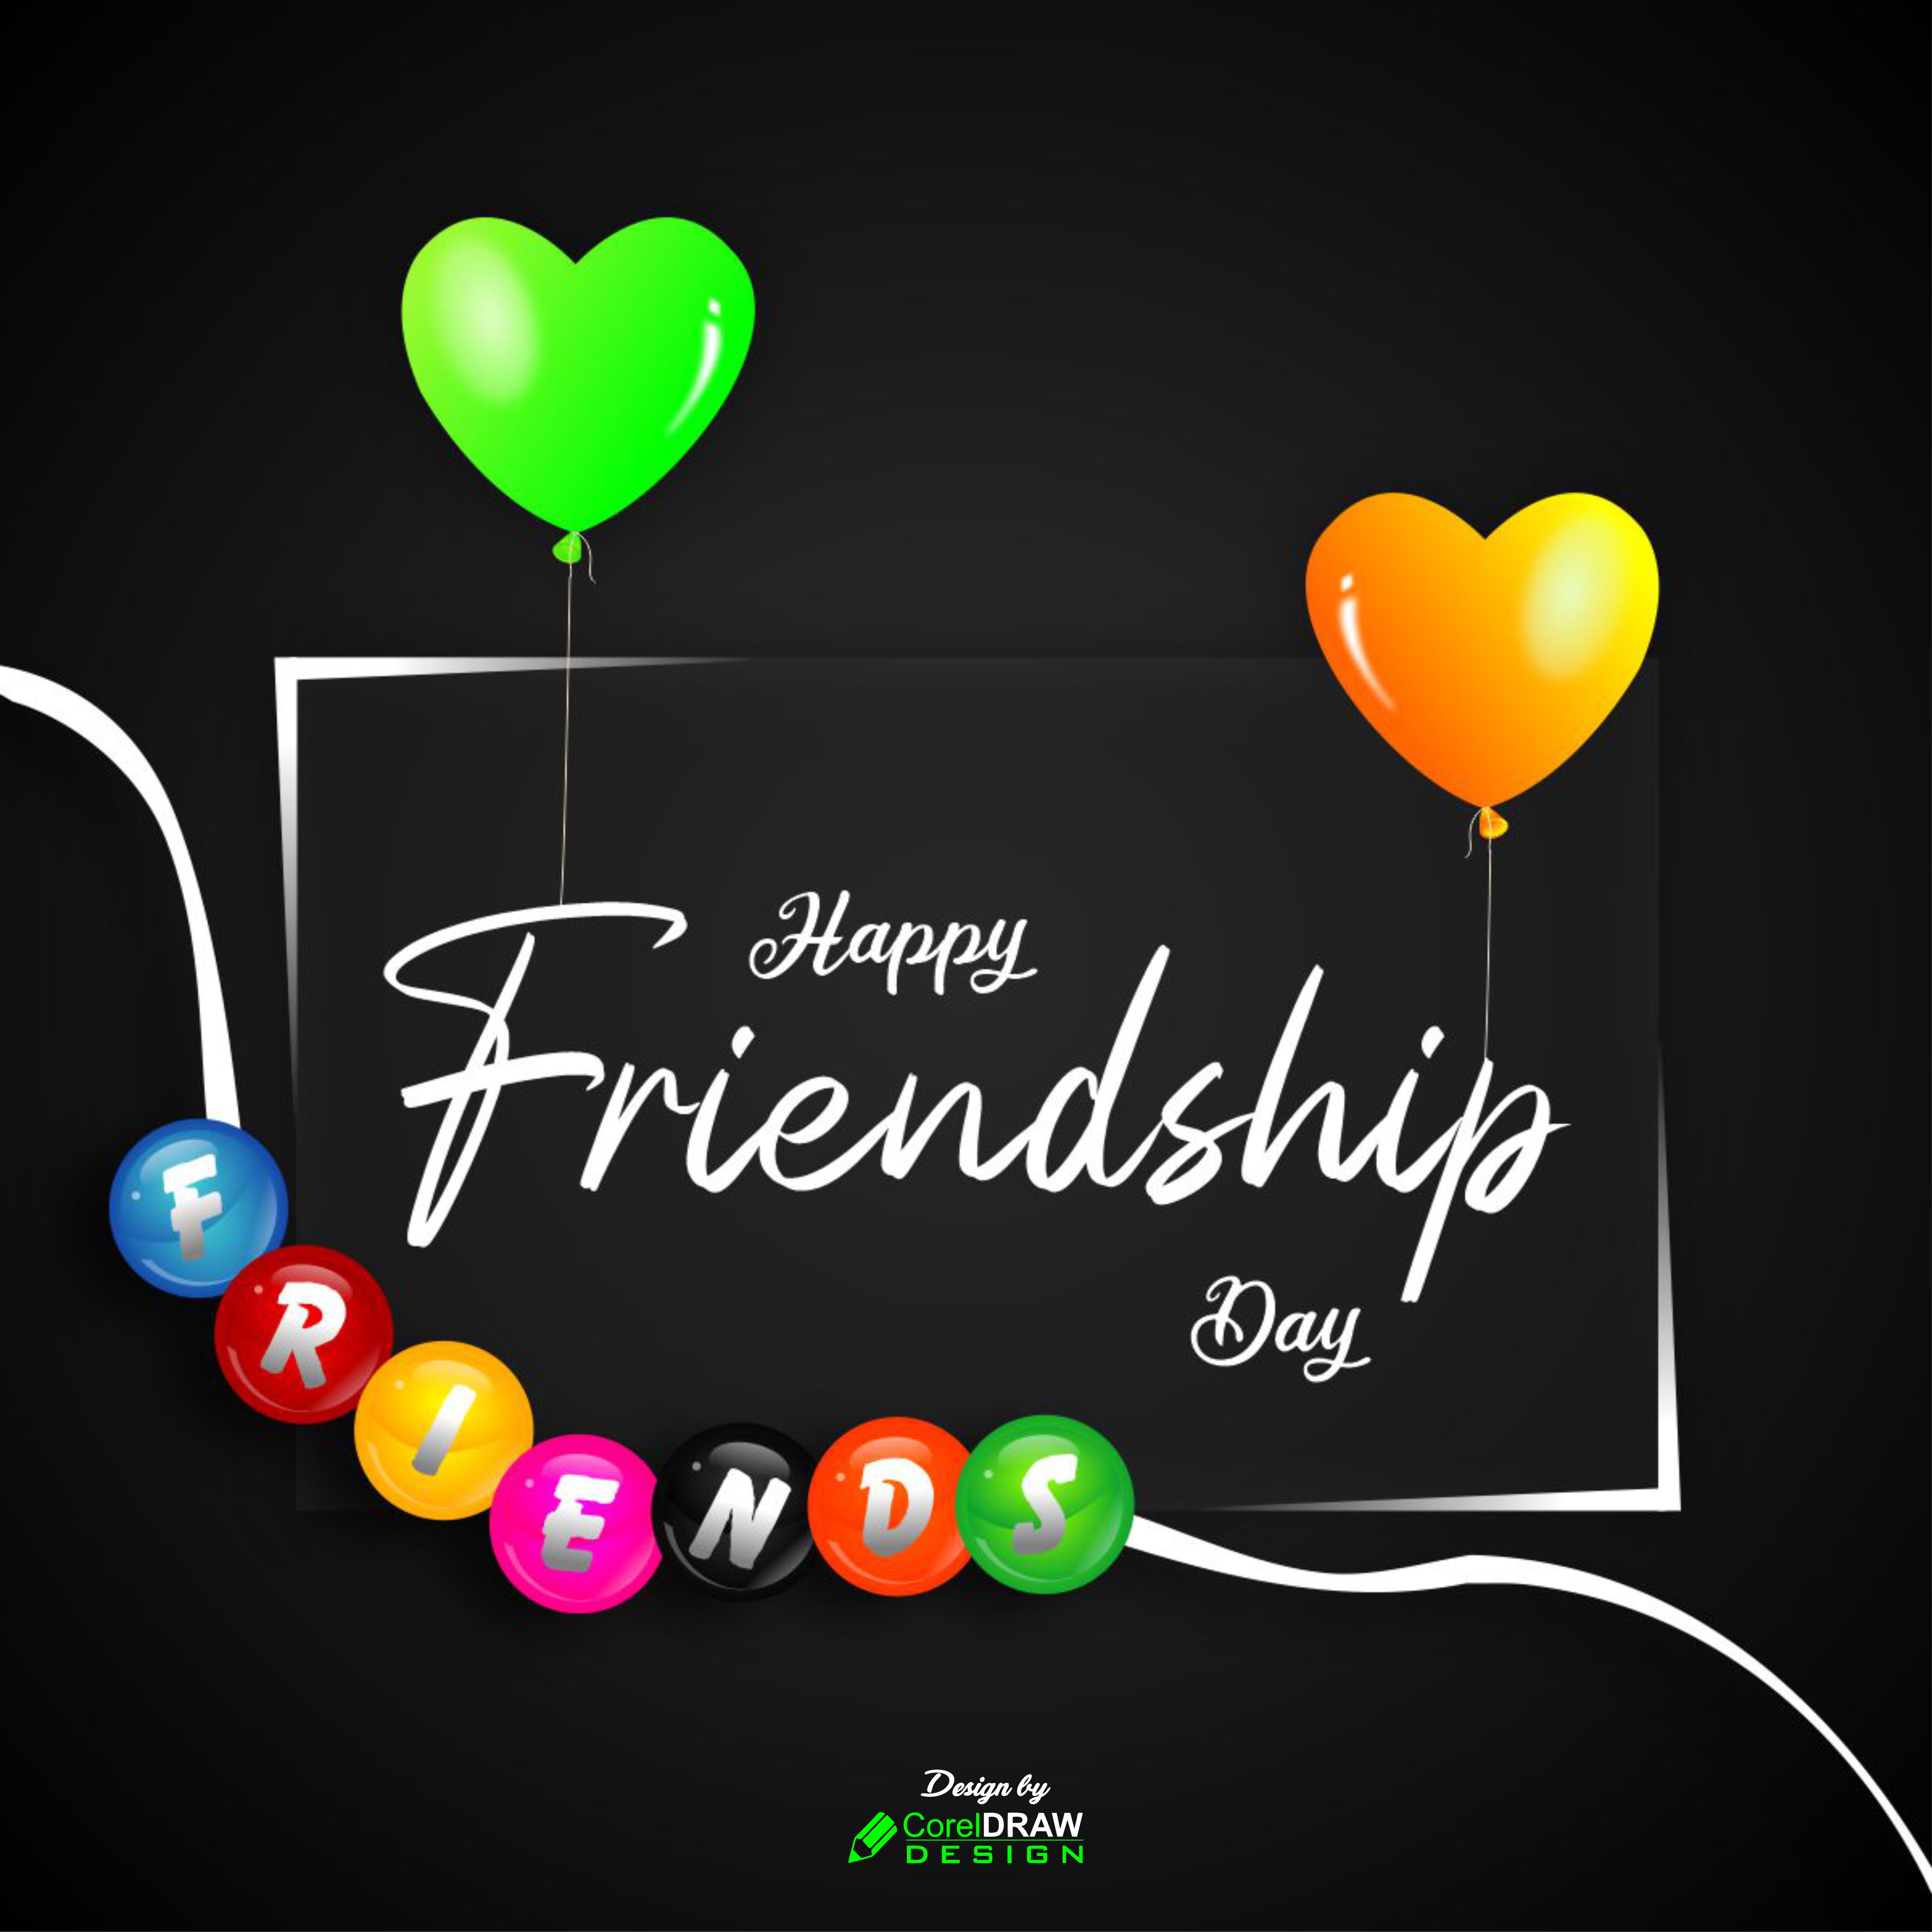 Friendship Day Wallpaper Images  Free Download on Freepik